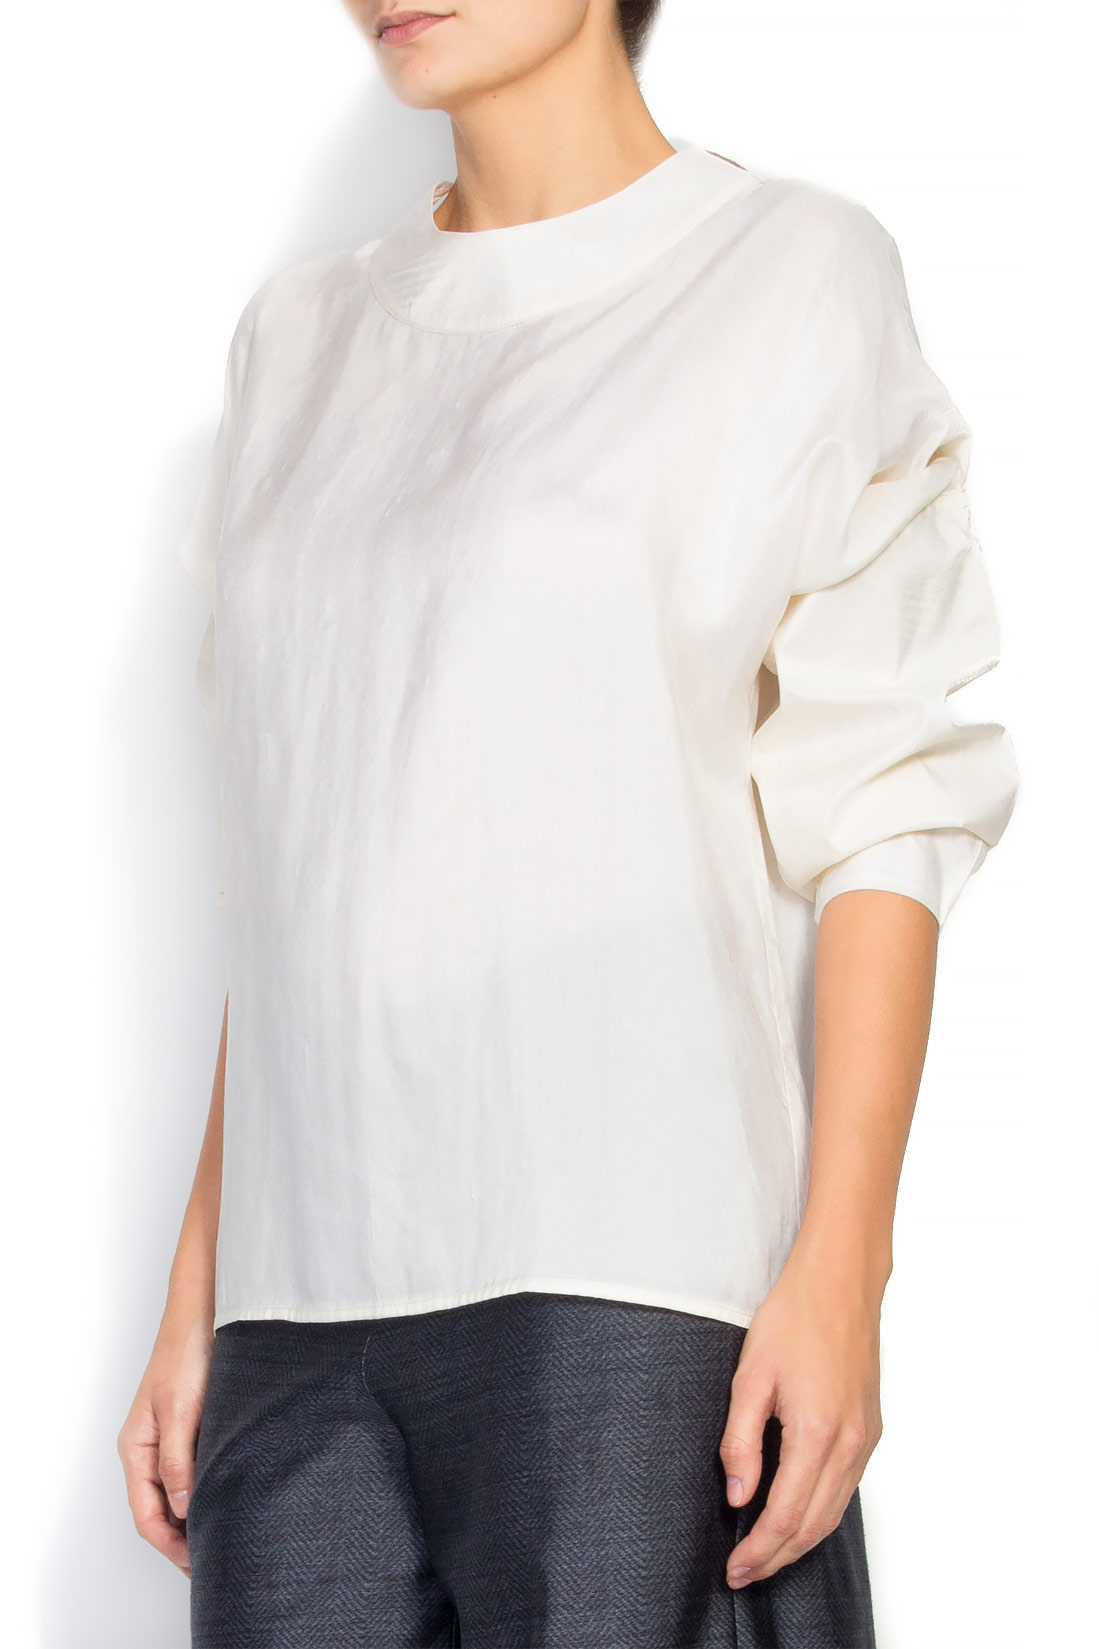 Silk blouse Daniela Barb image 1